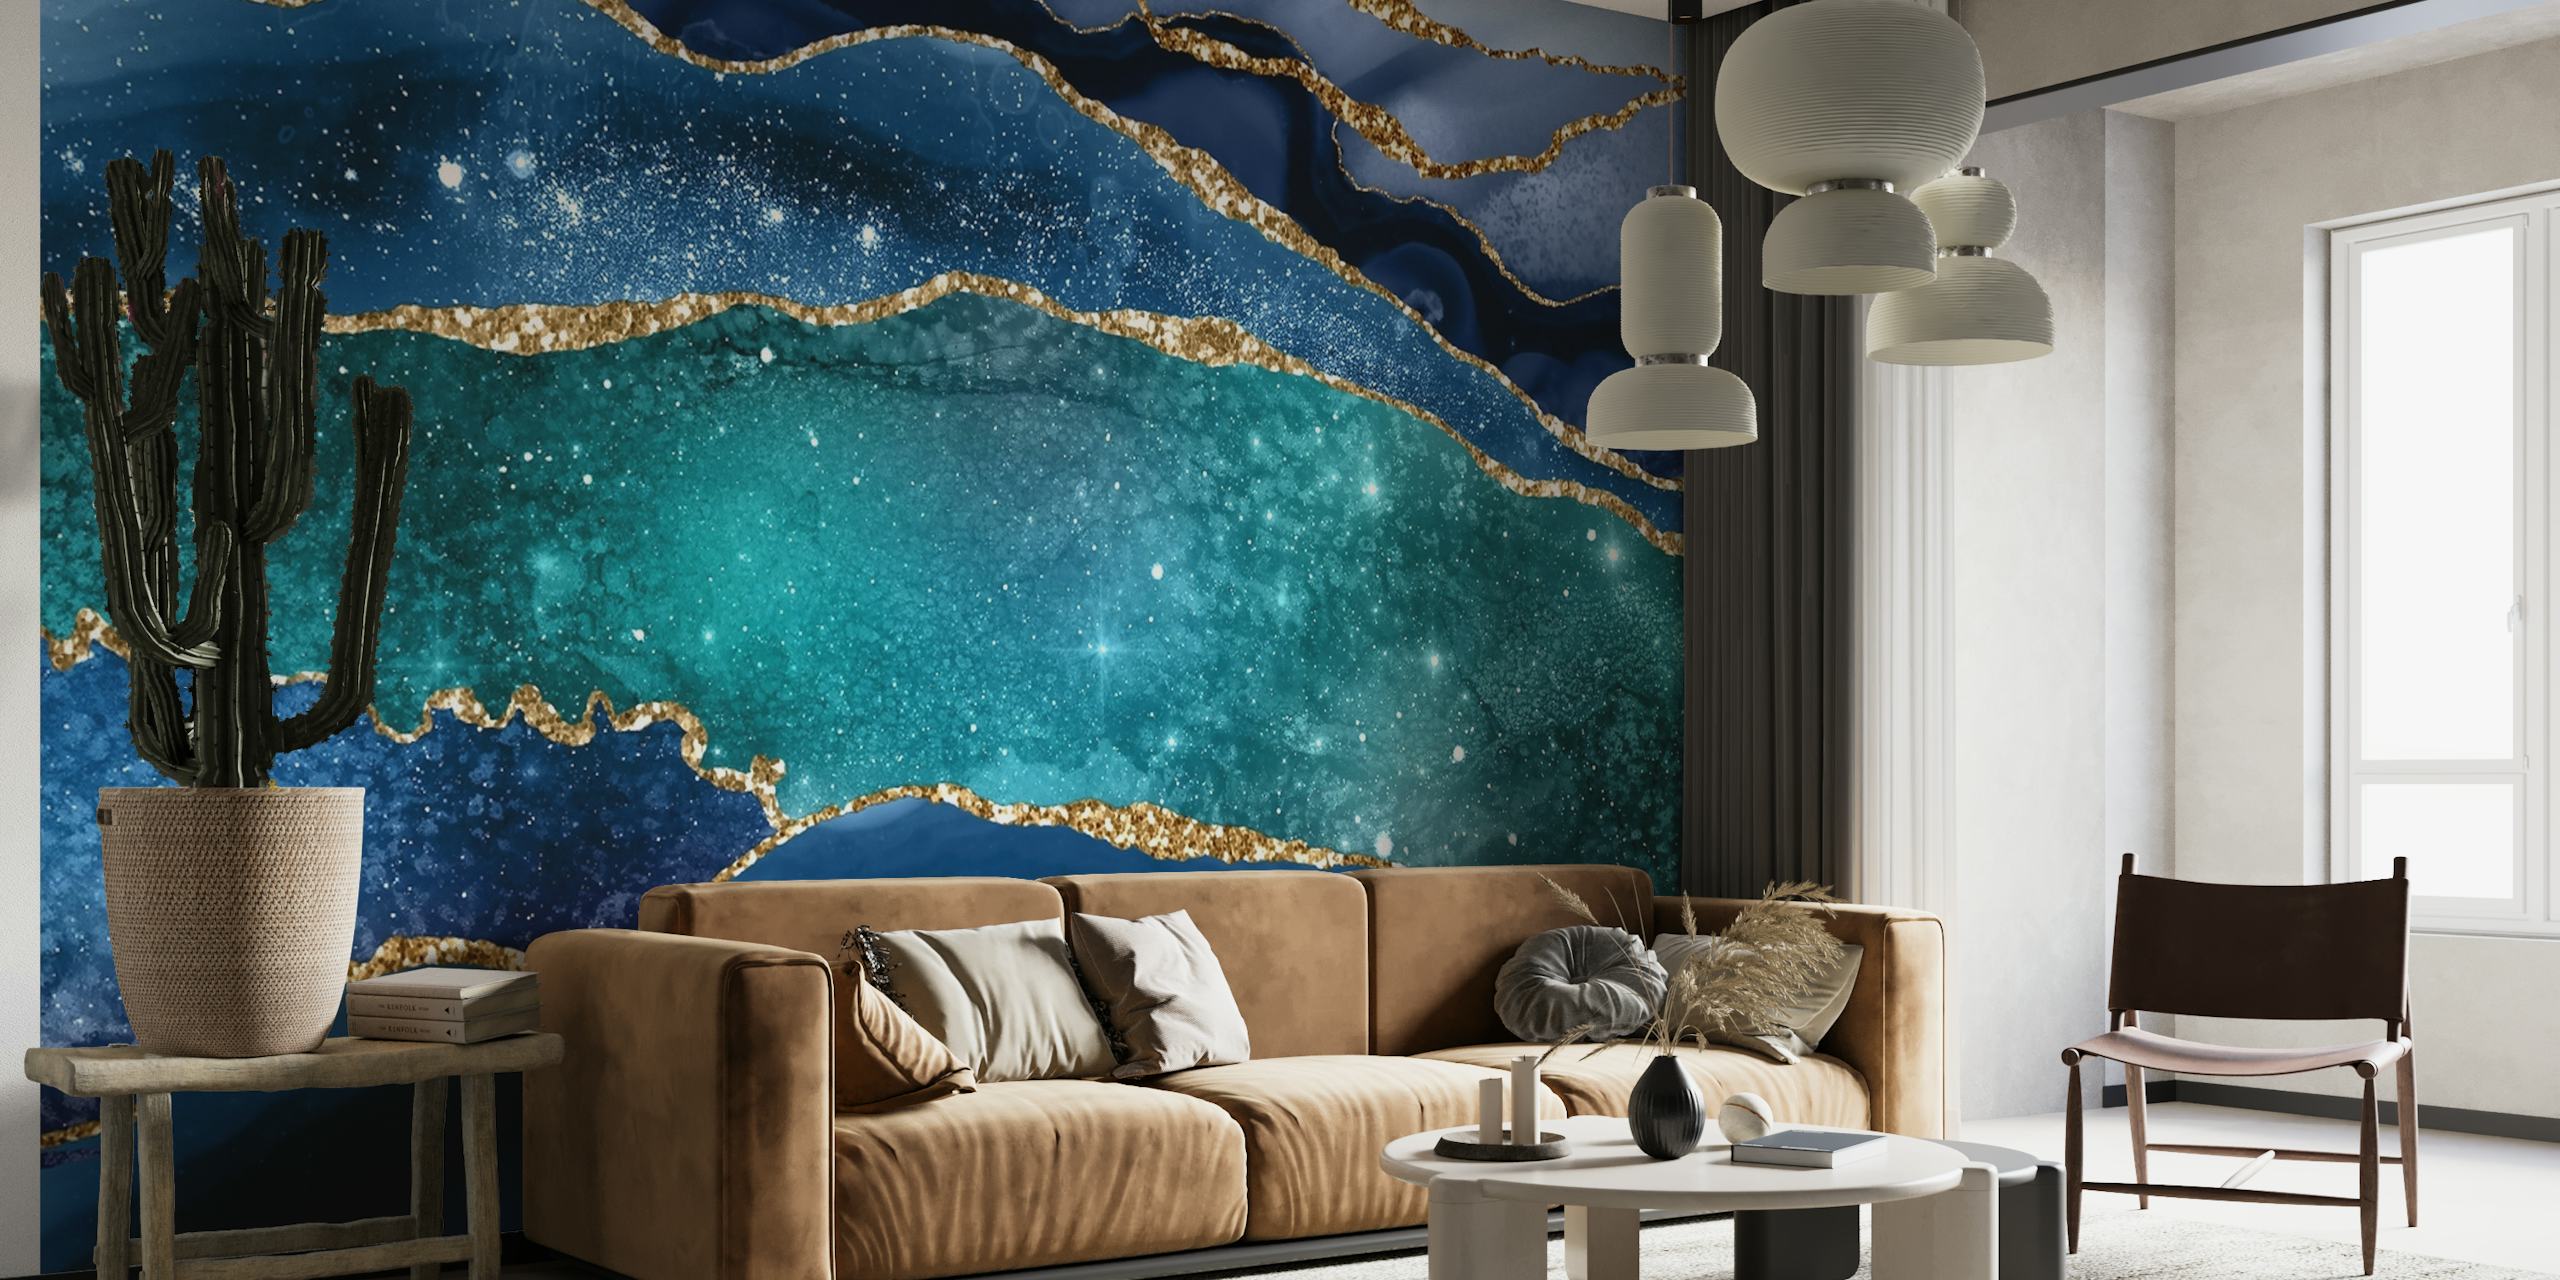 Marmortekstur med galaktisk tema med gyldne årer, der ligner en stjerneklar nattehimmel